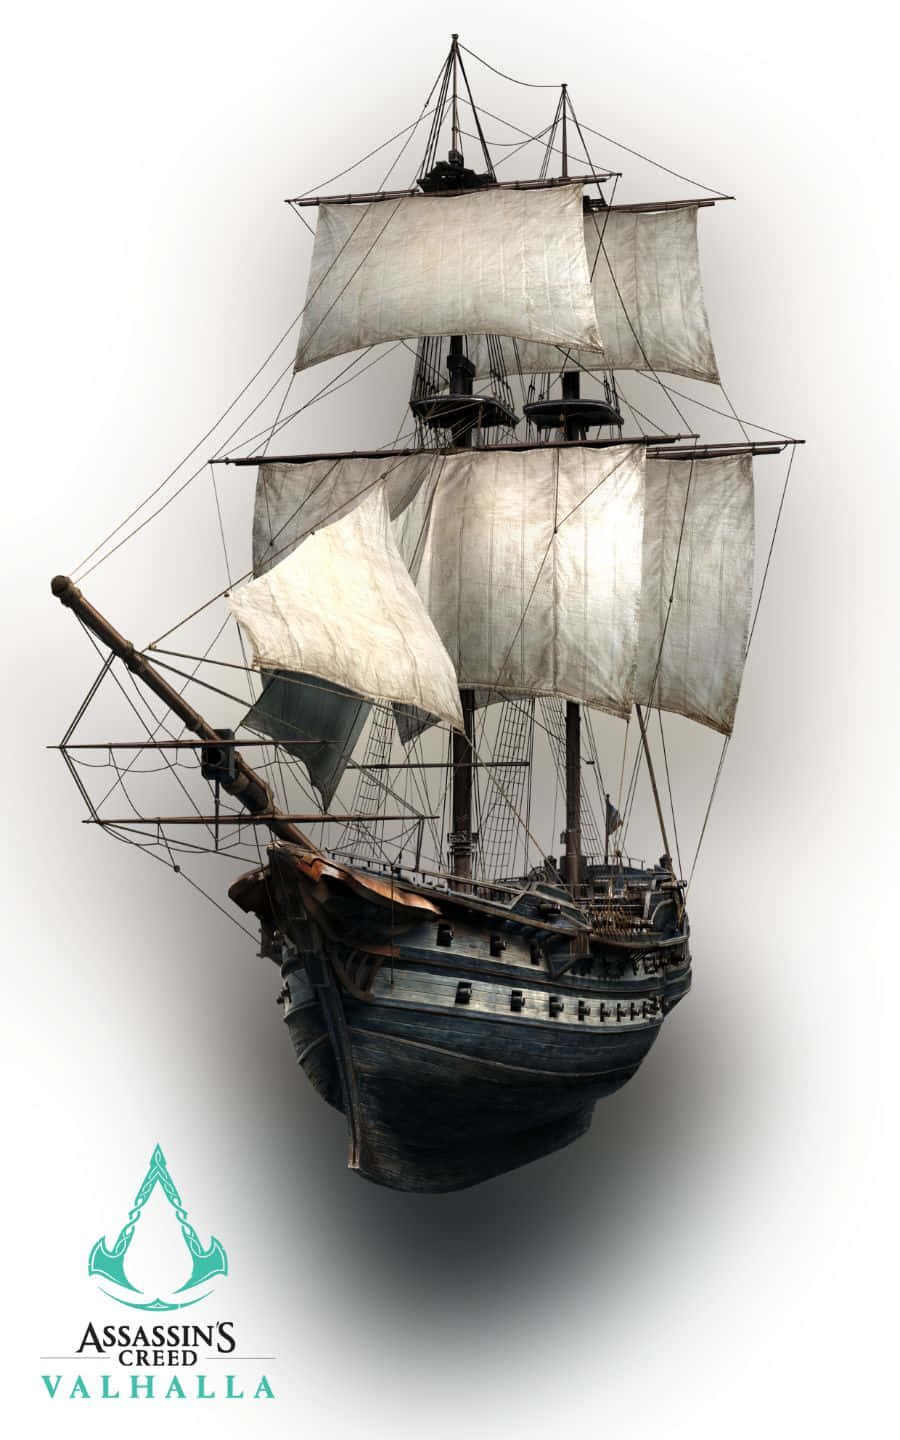 Huge Ship 1440p Assassin's Creed Valhalla Background